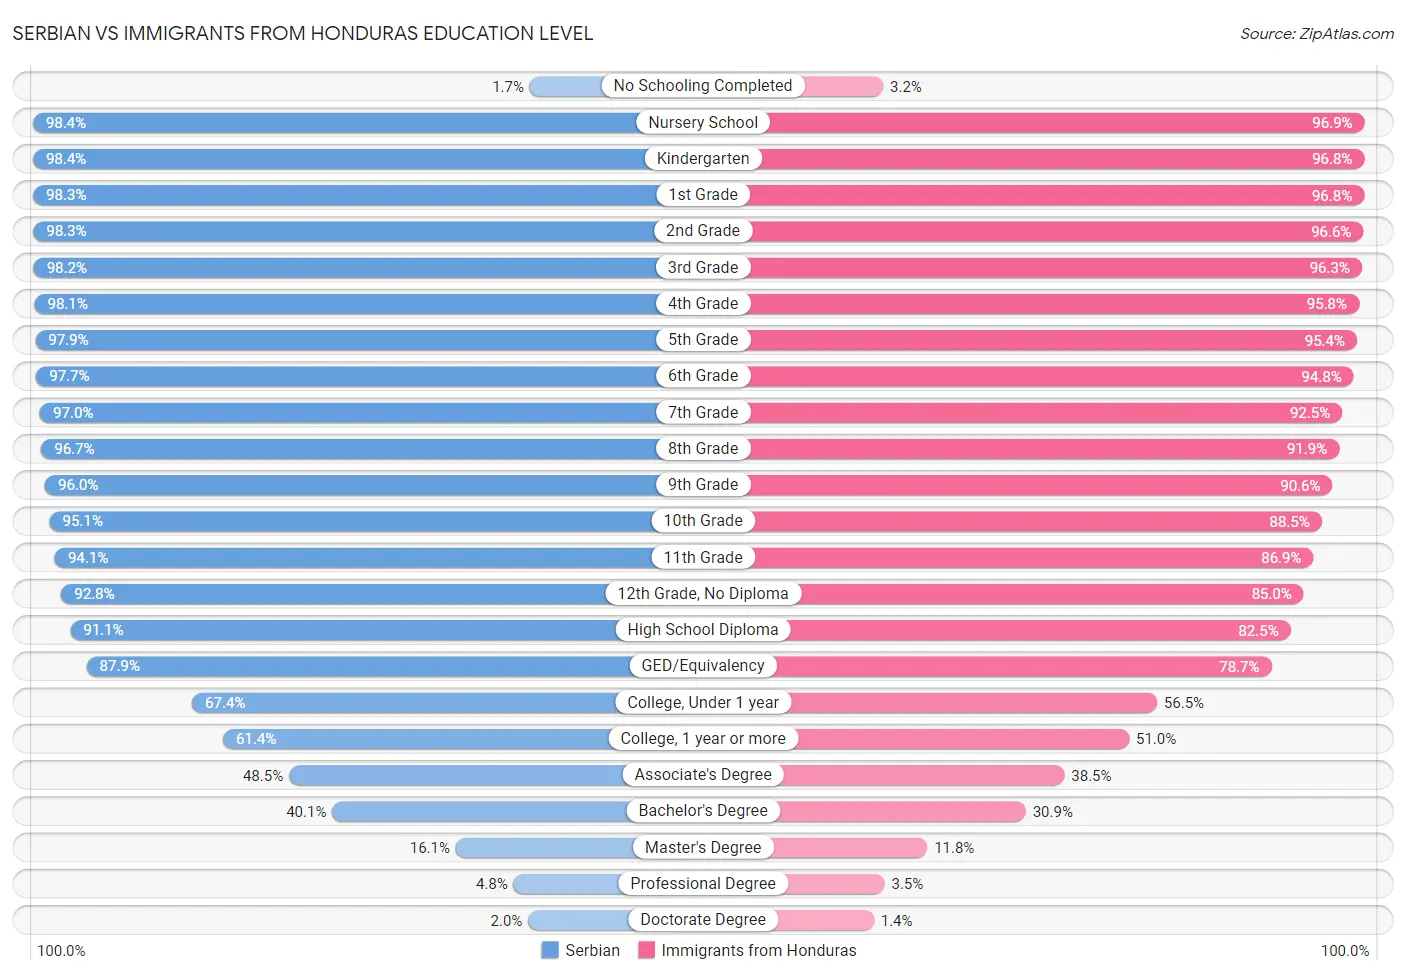 Serbian vs Immigrants from Honduras Education Level